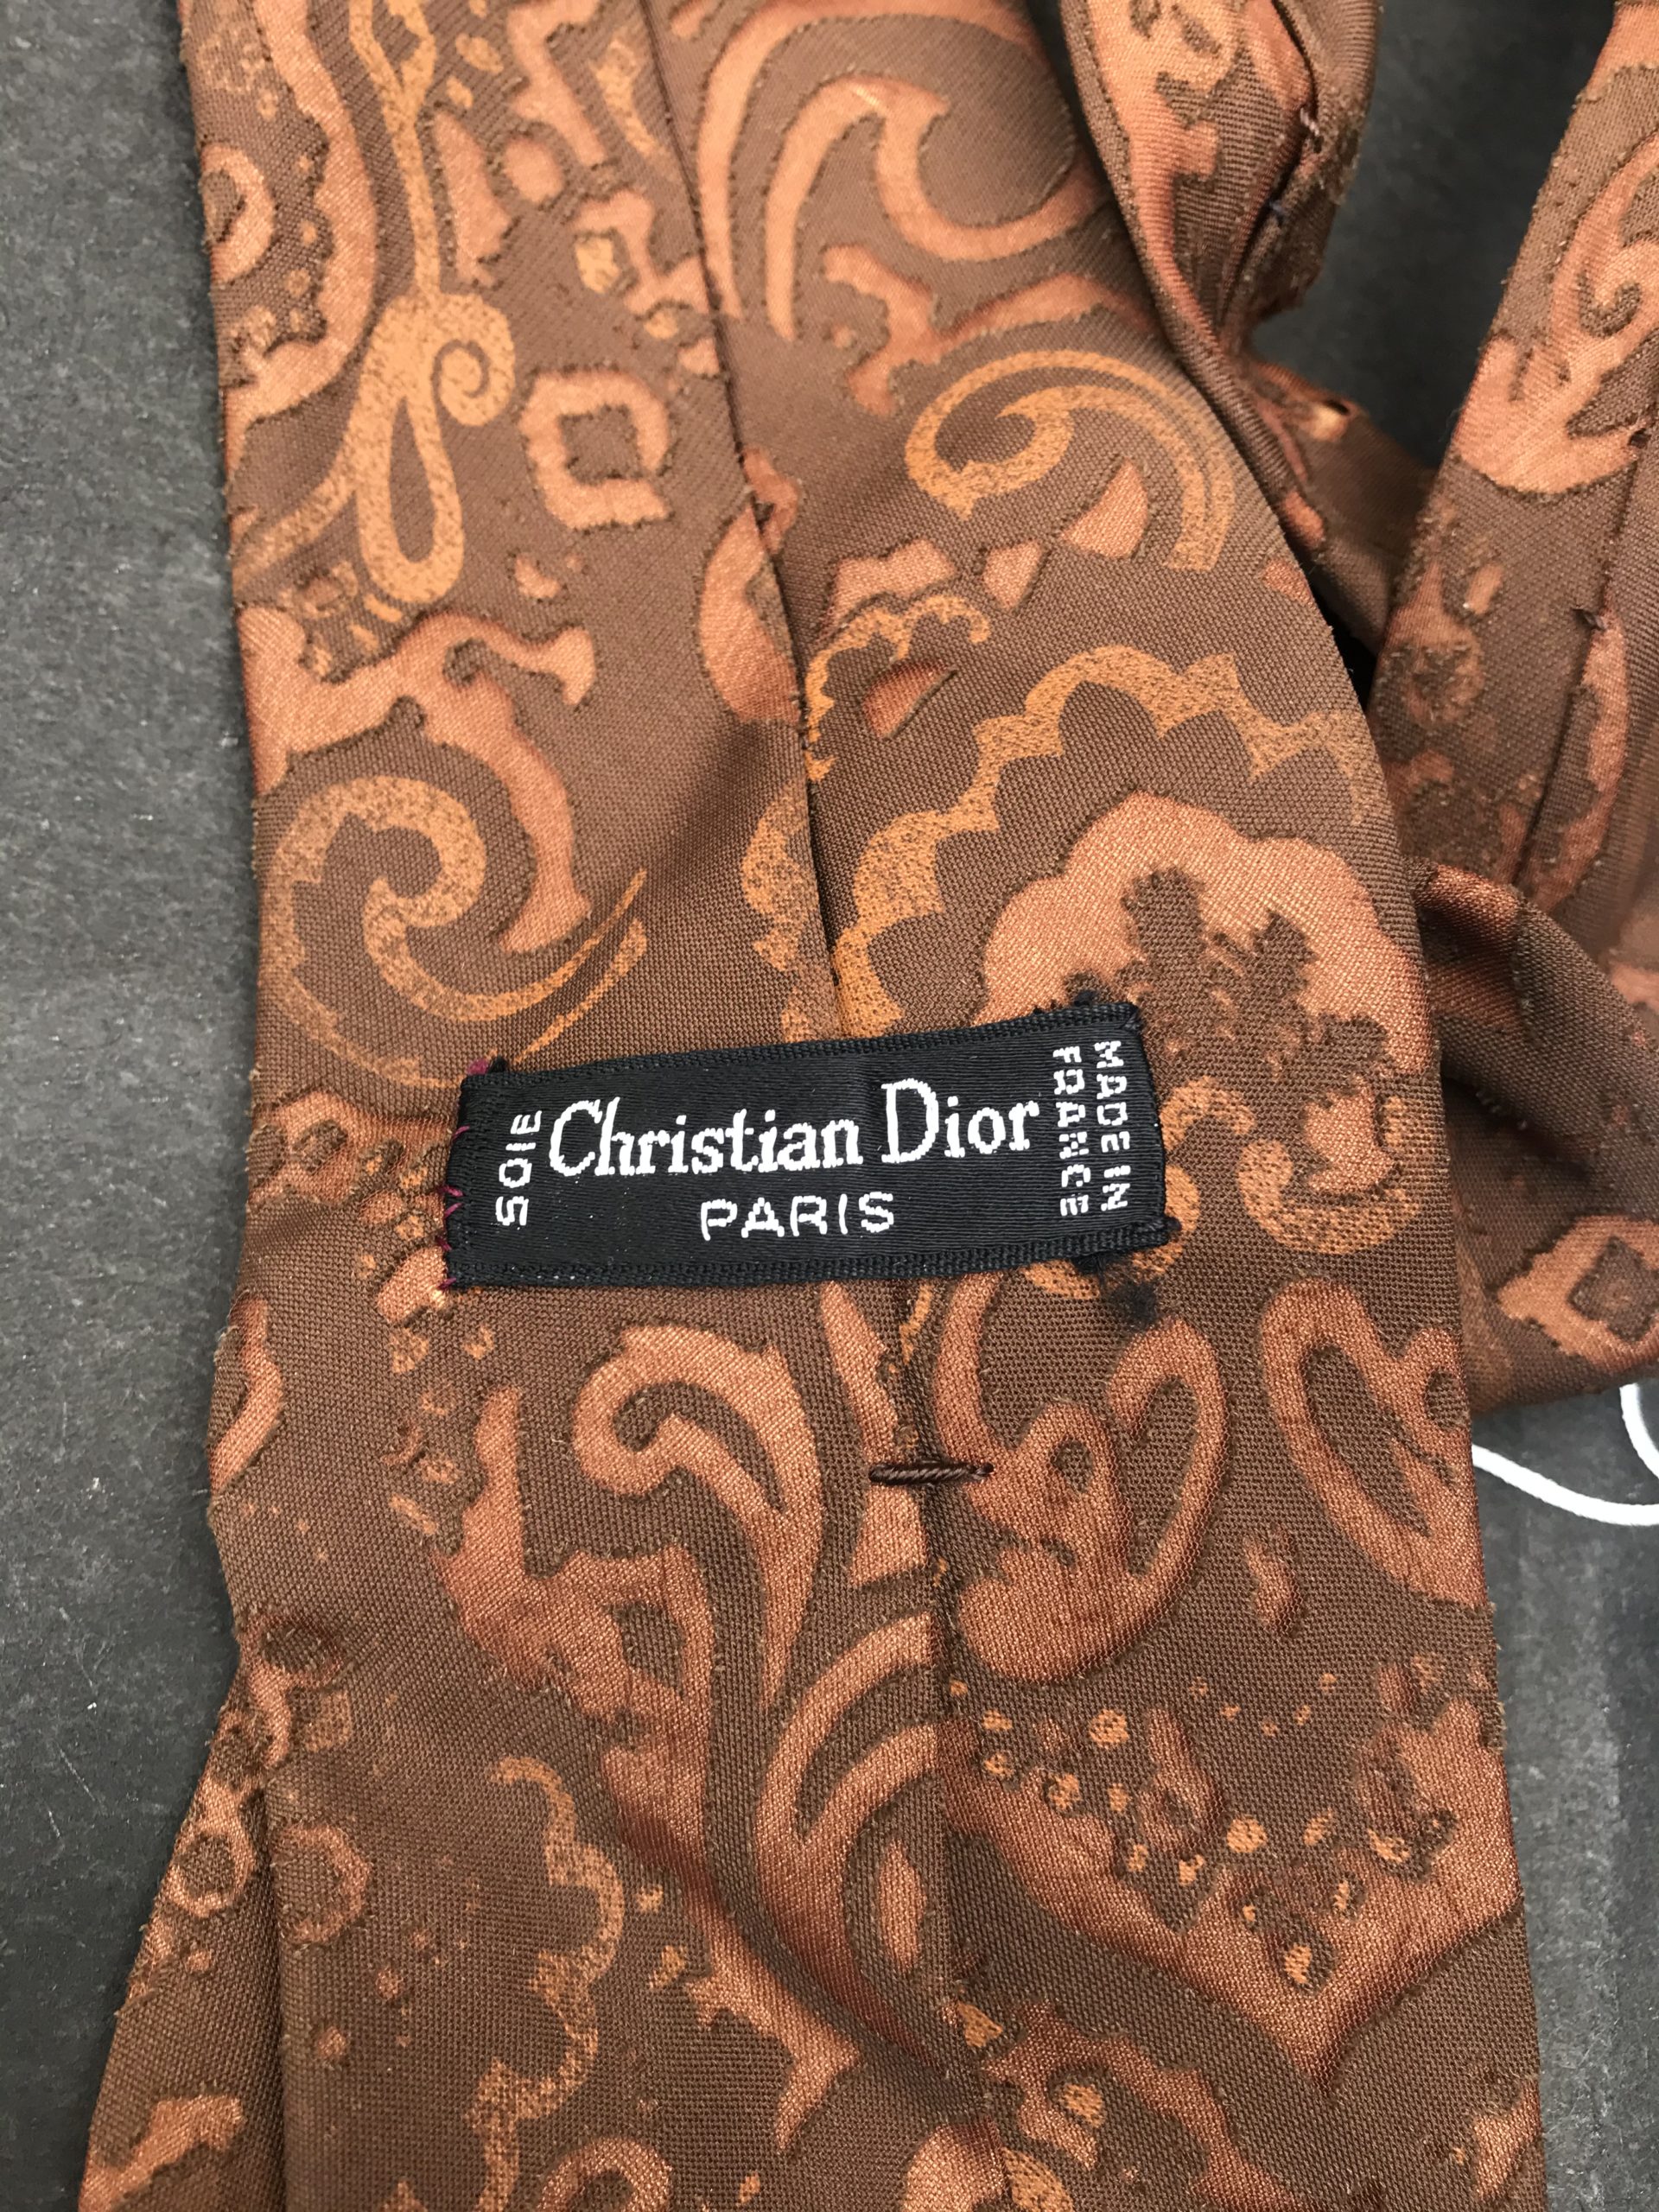 Christian Dior Tie | Bespoke Not Broke